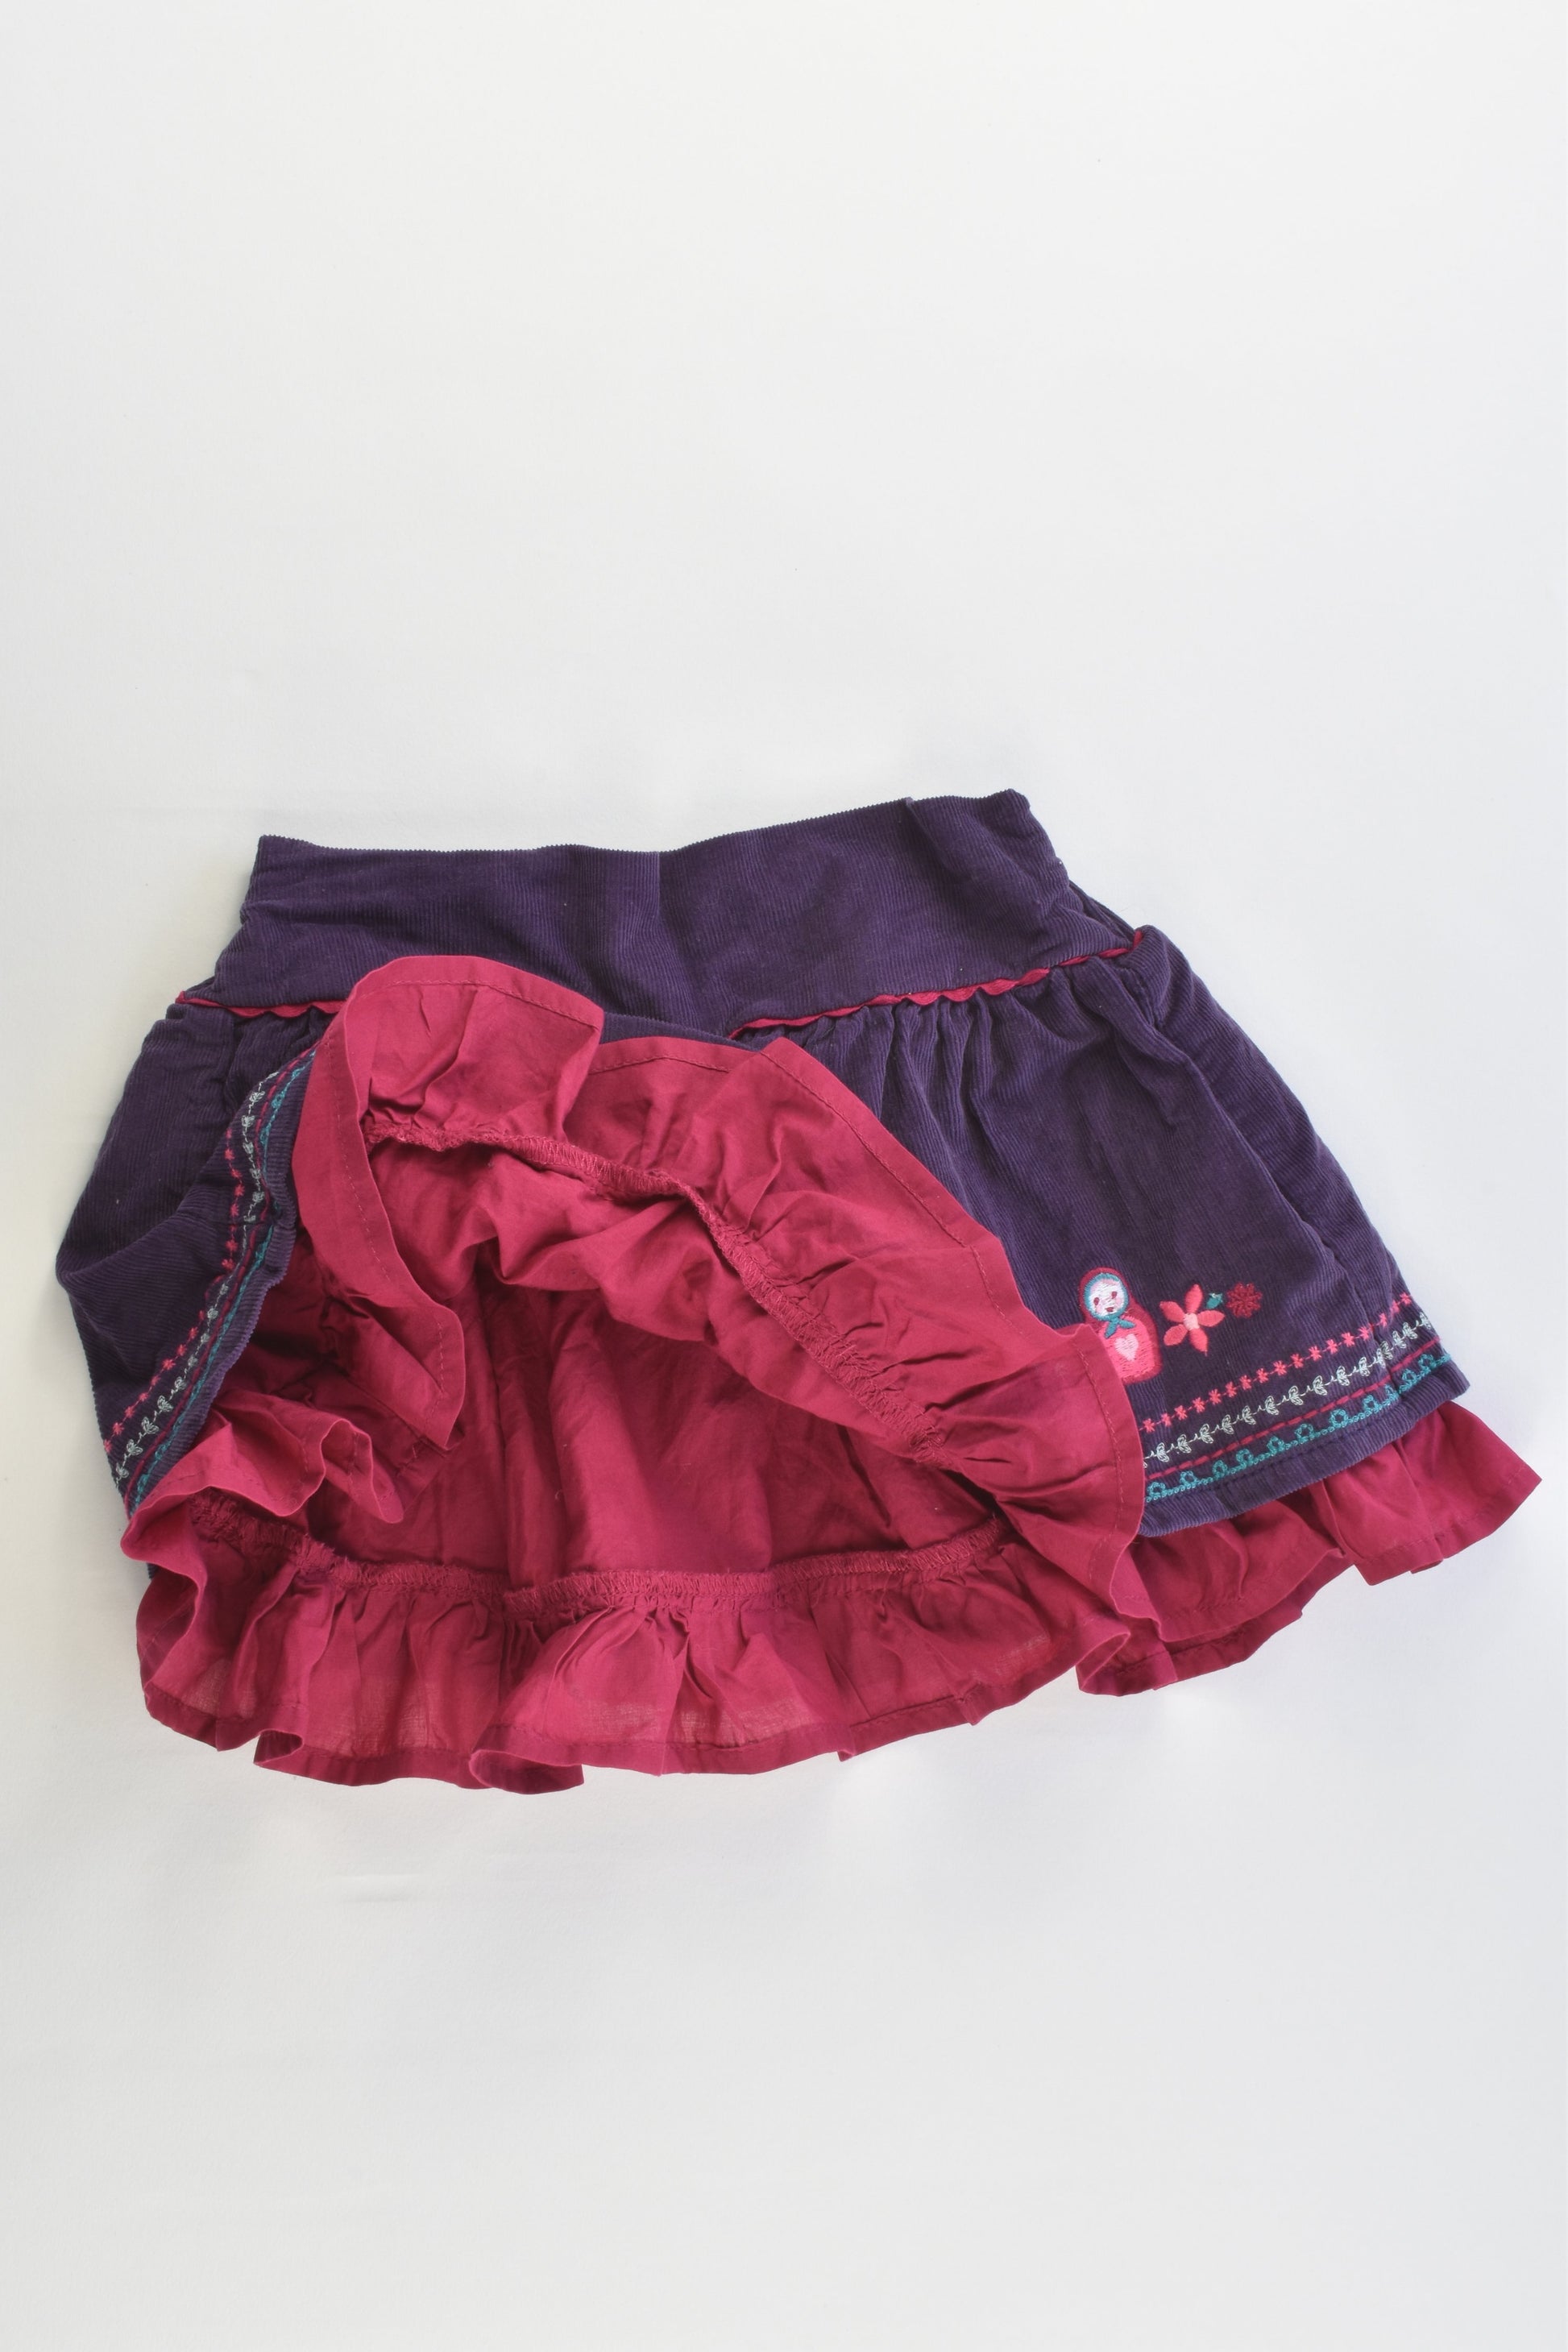 Target Size 2 (18-24 months) Lined Cord Matryoshka Skirt